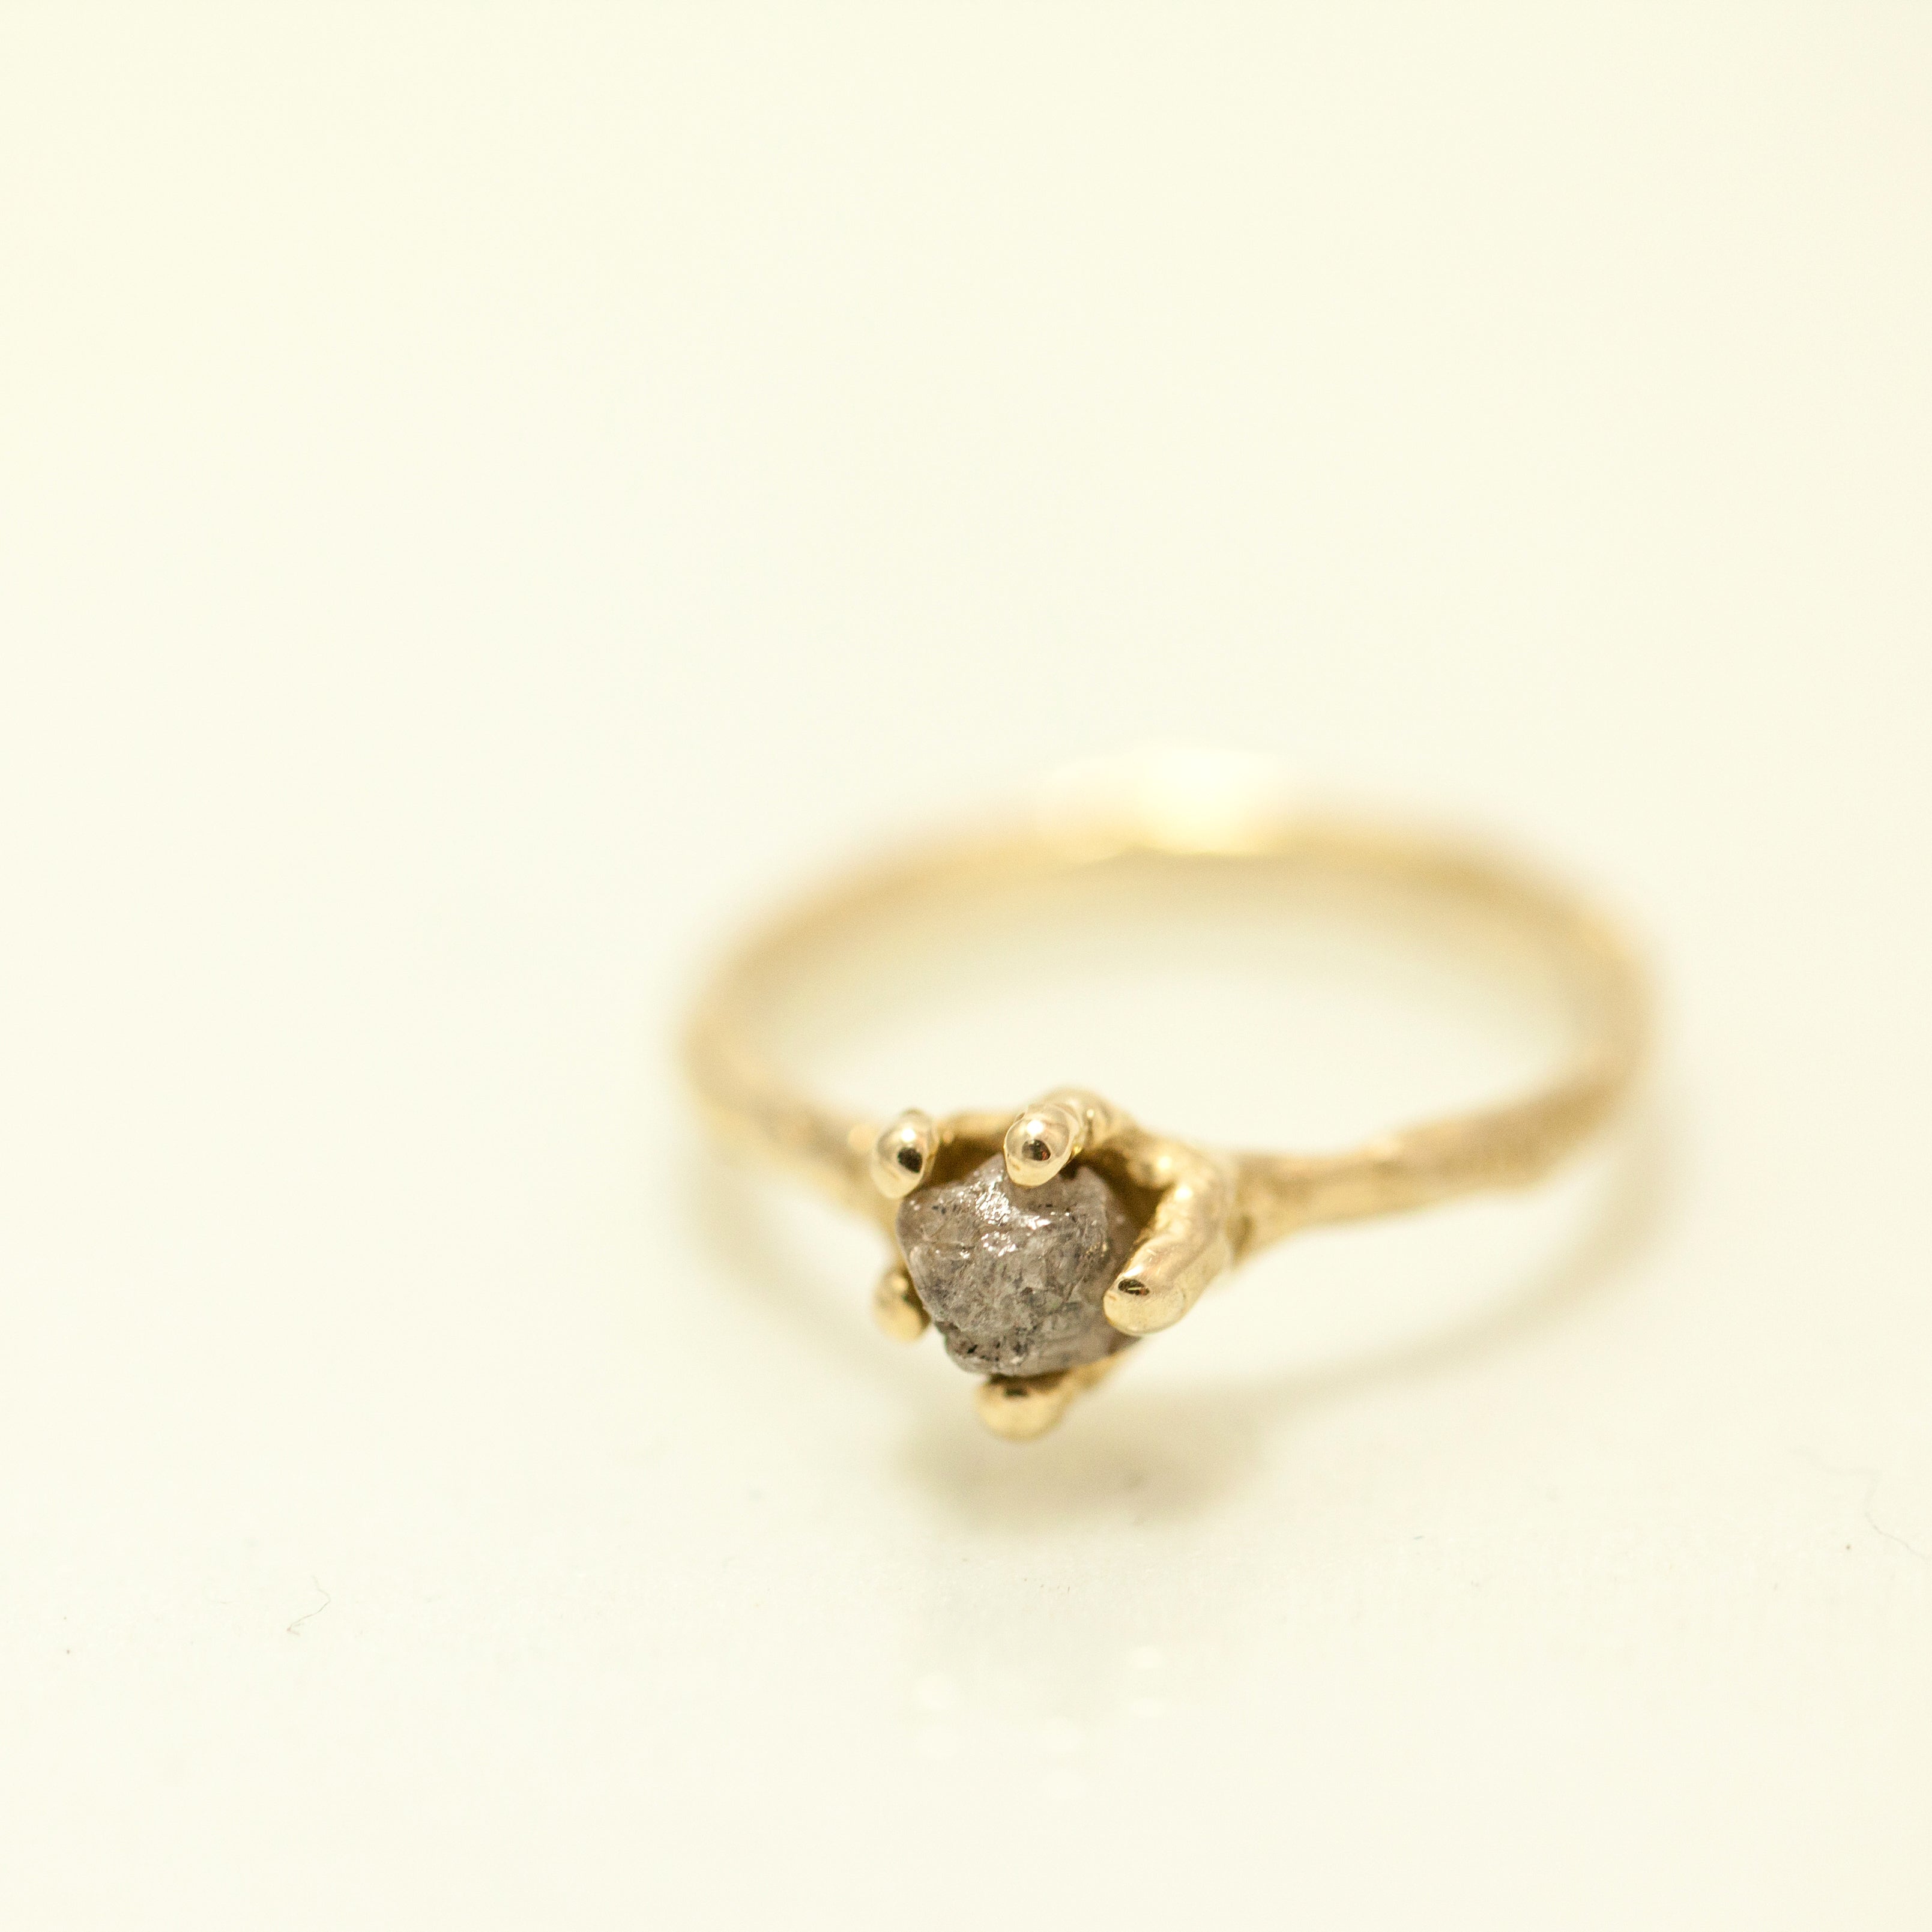 Rough diamond solitaire ring